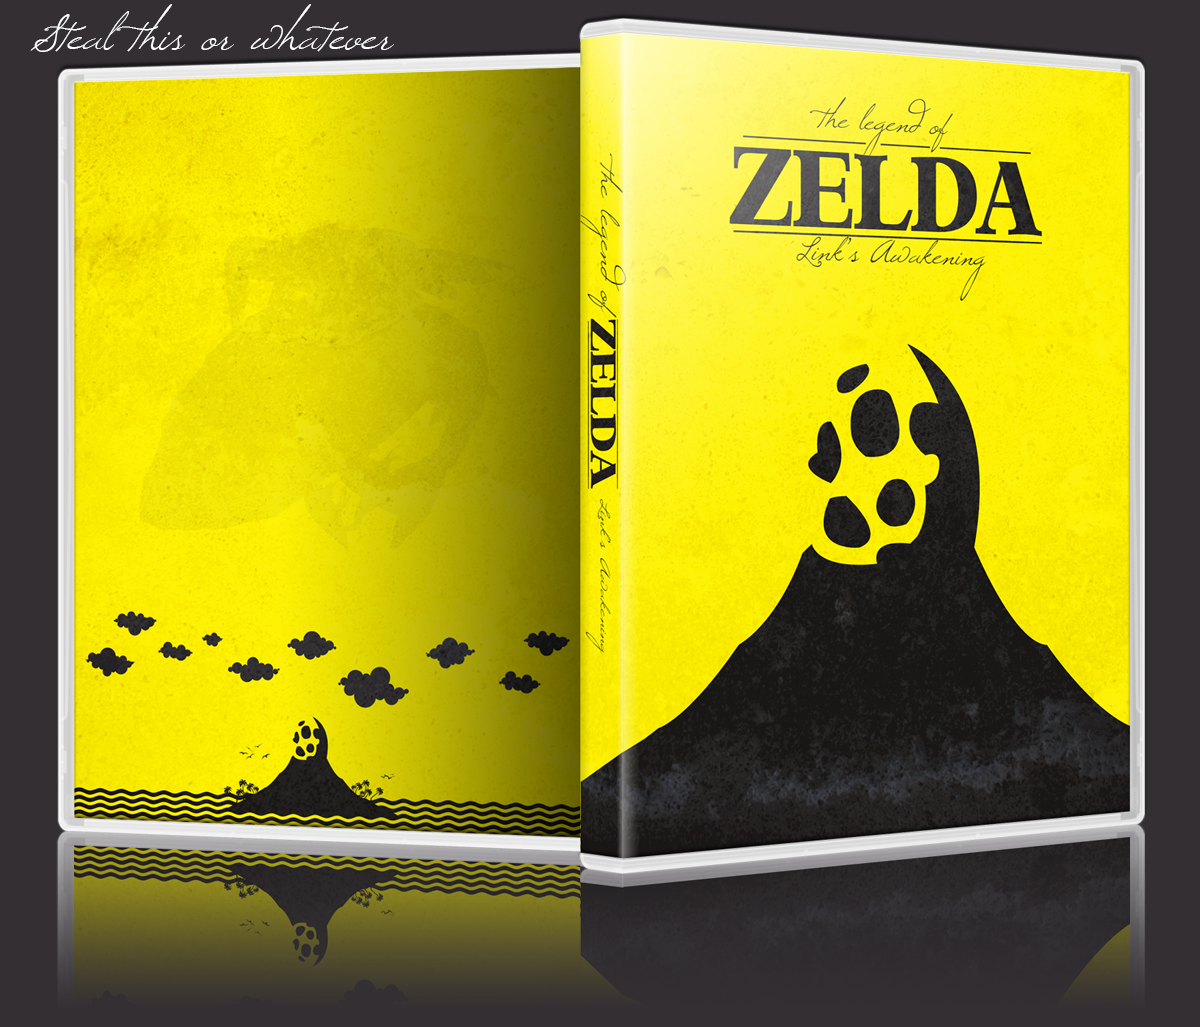 The Legend of Zelda: Link's Awakening box cover